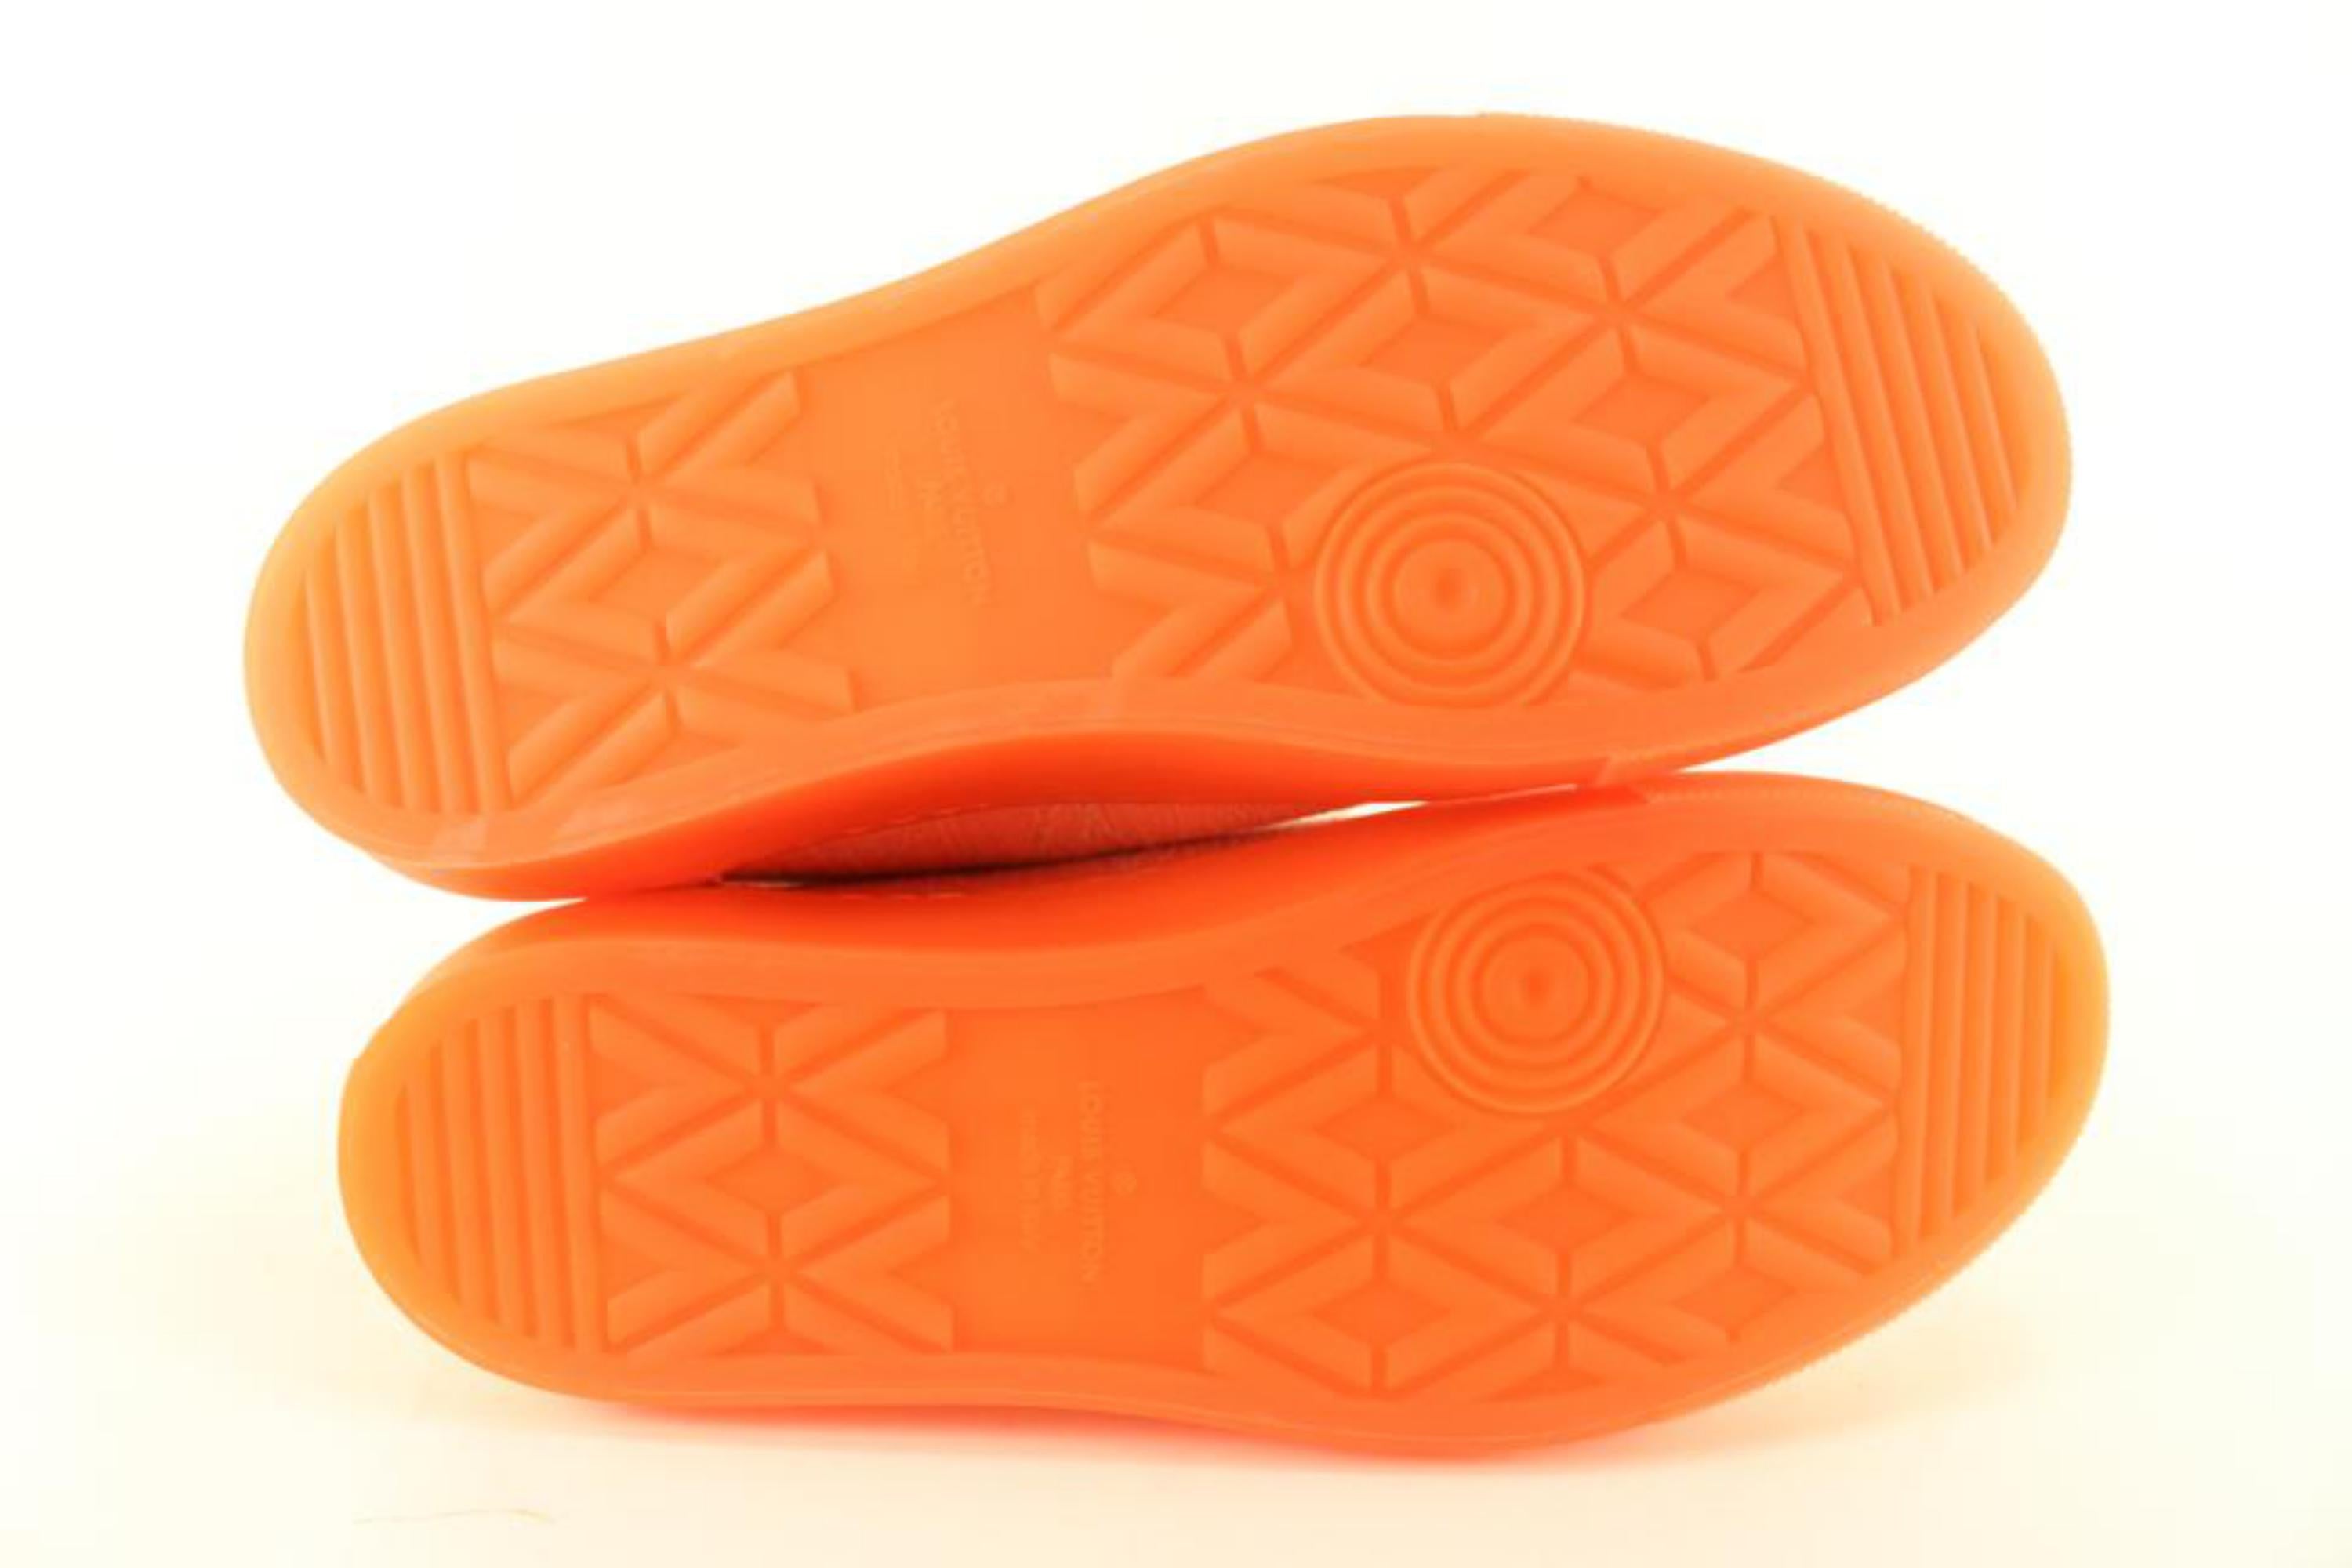 orange louis vuitton sneaker